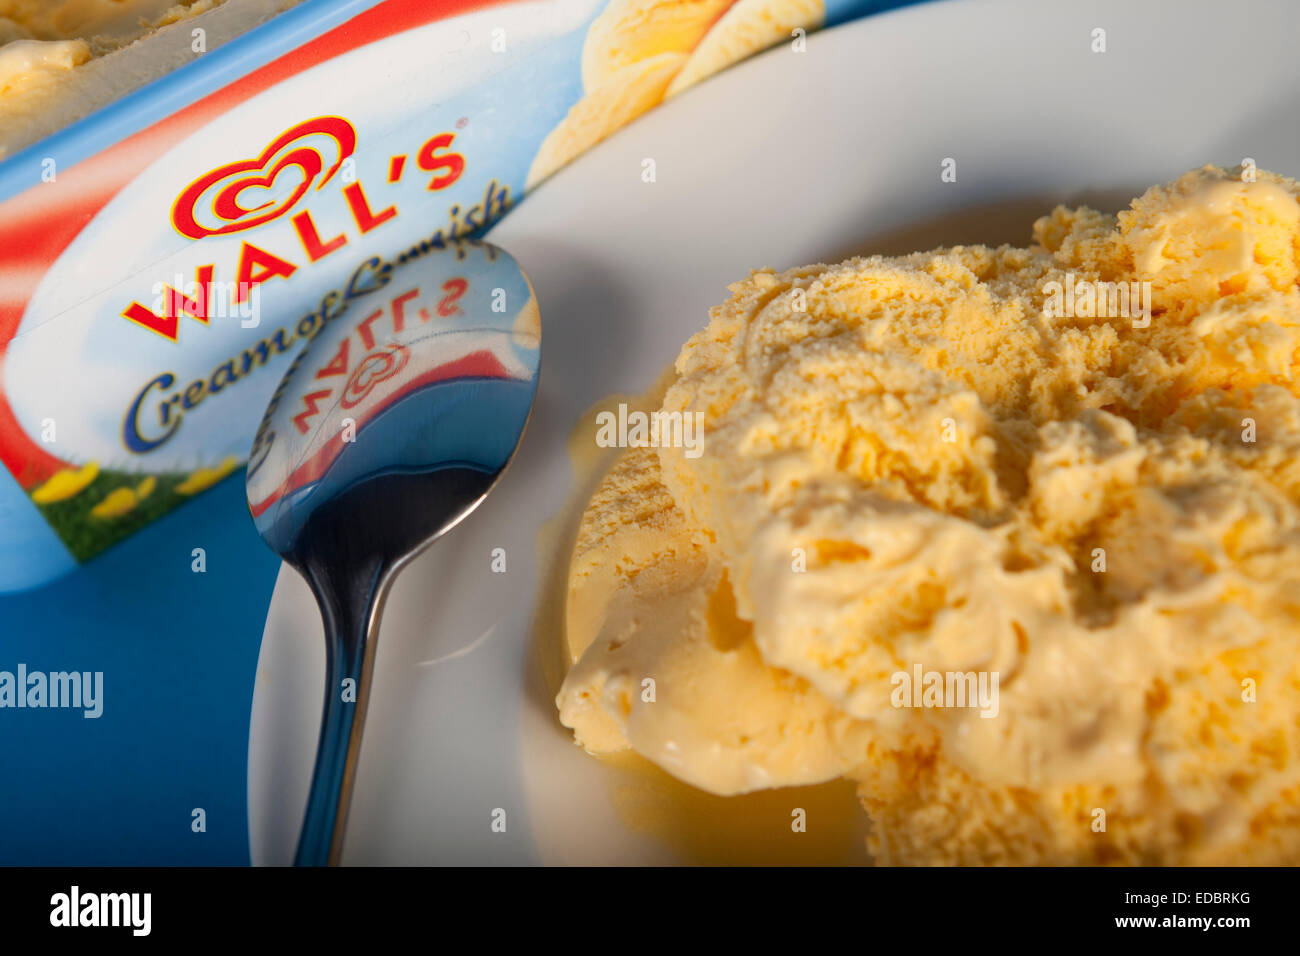 Illustrative image of Walls Cream of Cornish, soft scoop ice-cream. A Unilever brand. Stock Photo